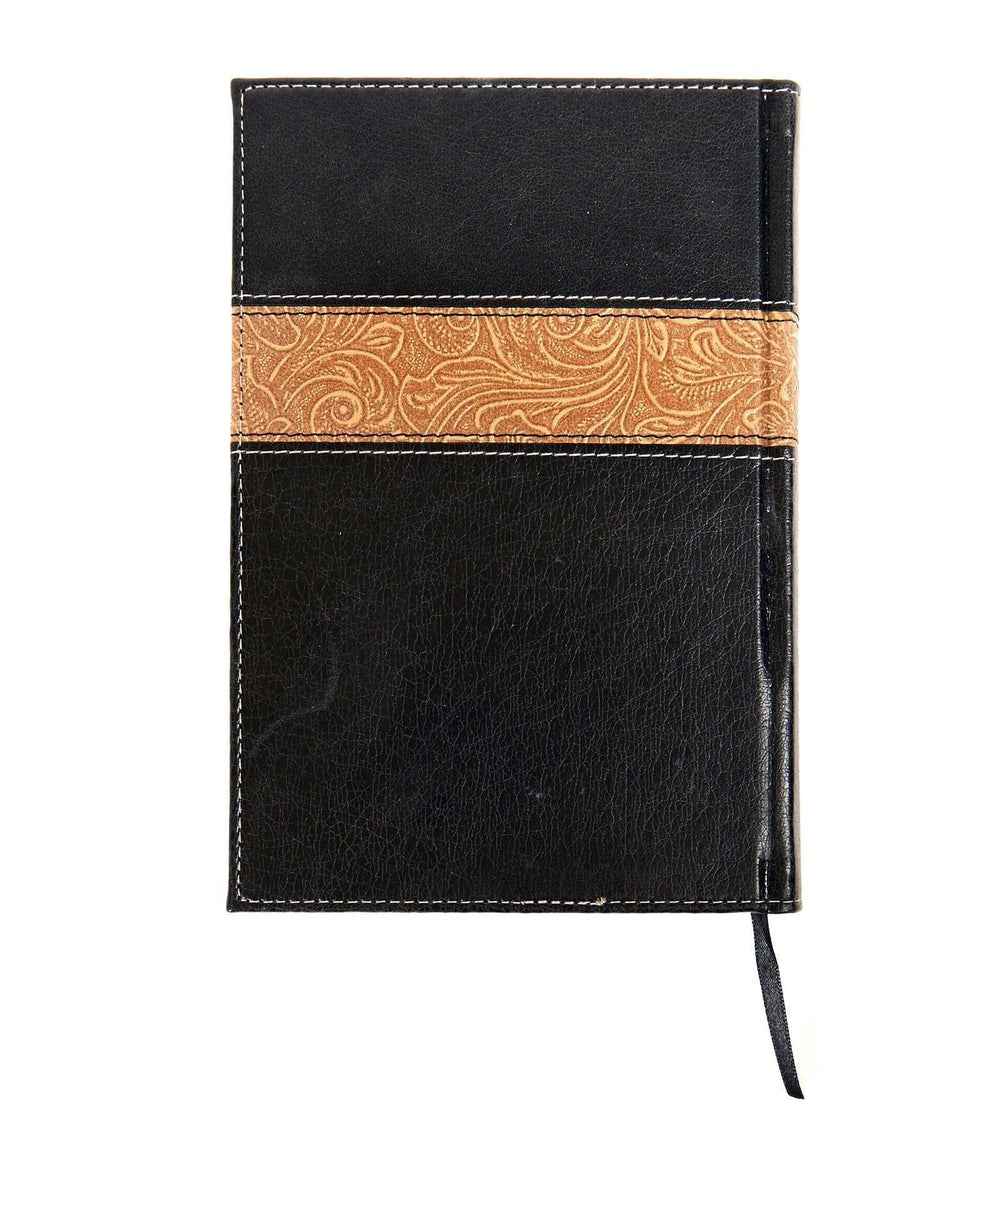 KJV Reader's Bible, Black/Brown Tooled LeatherTouch - Pura Vida Books